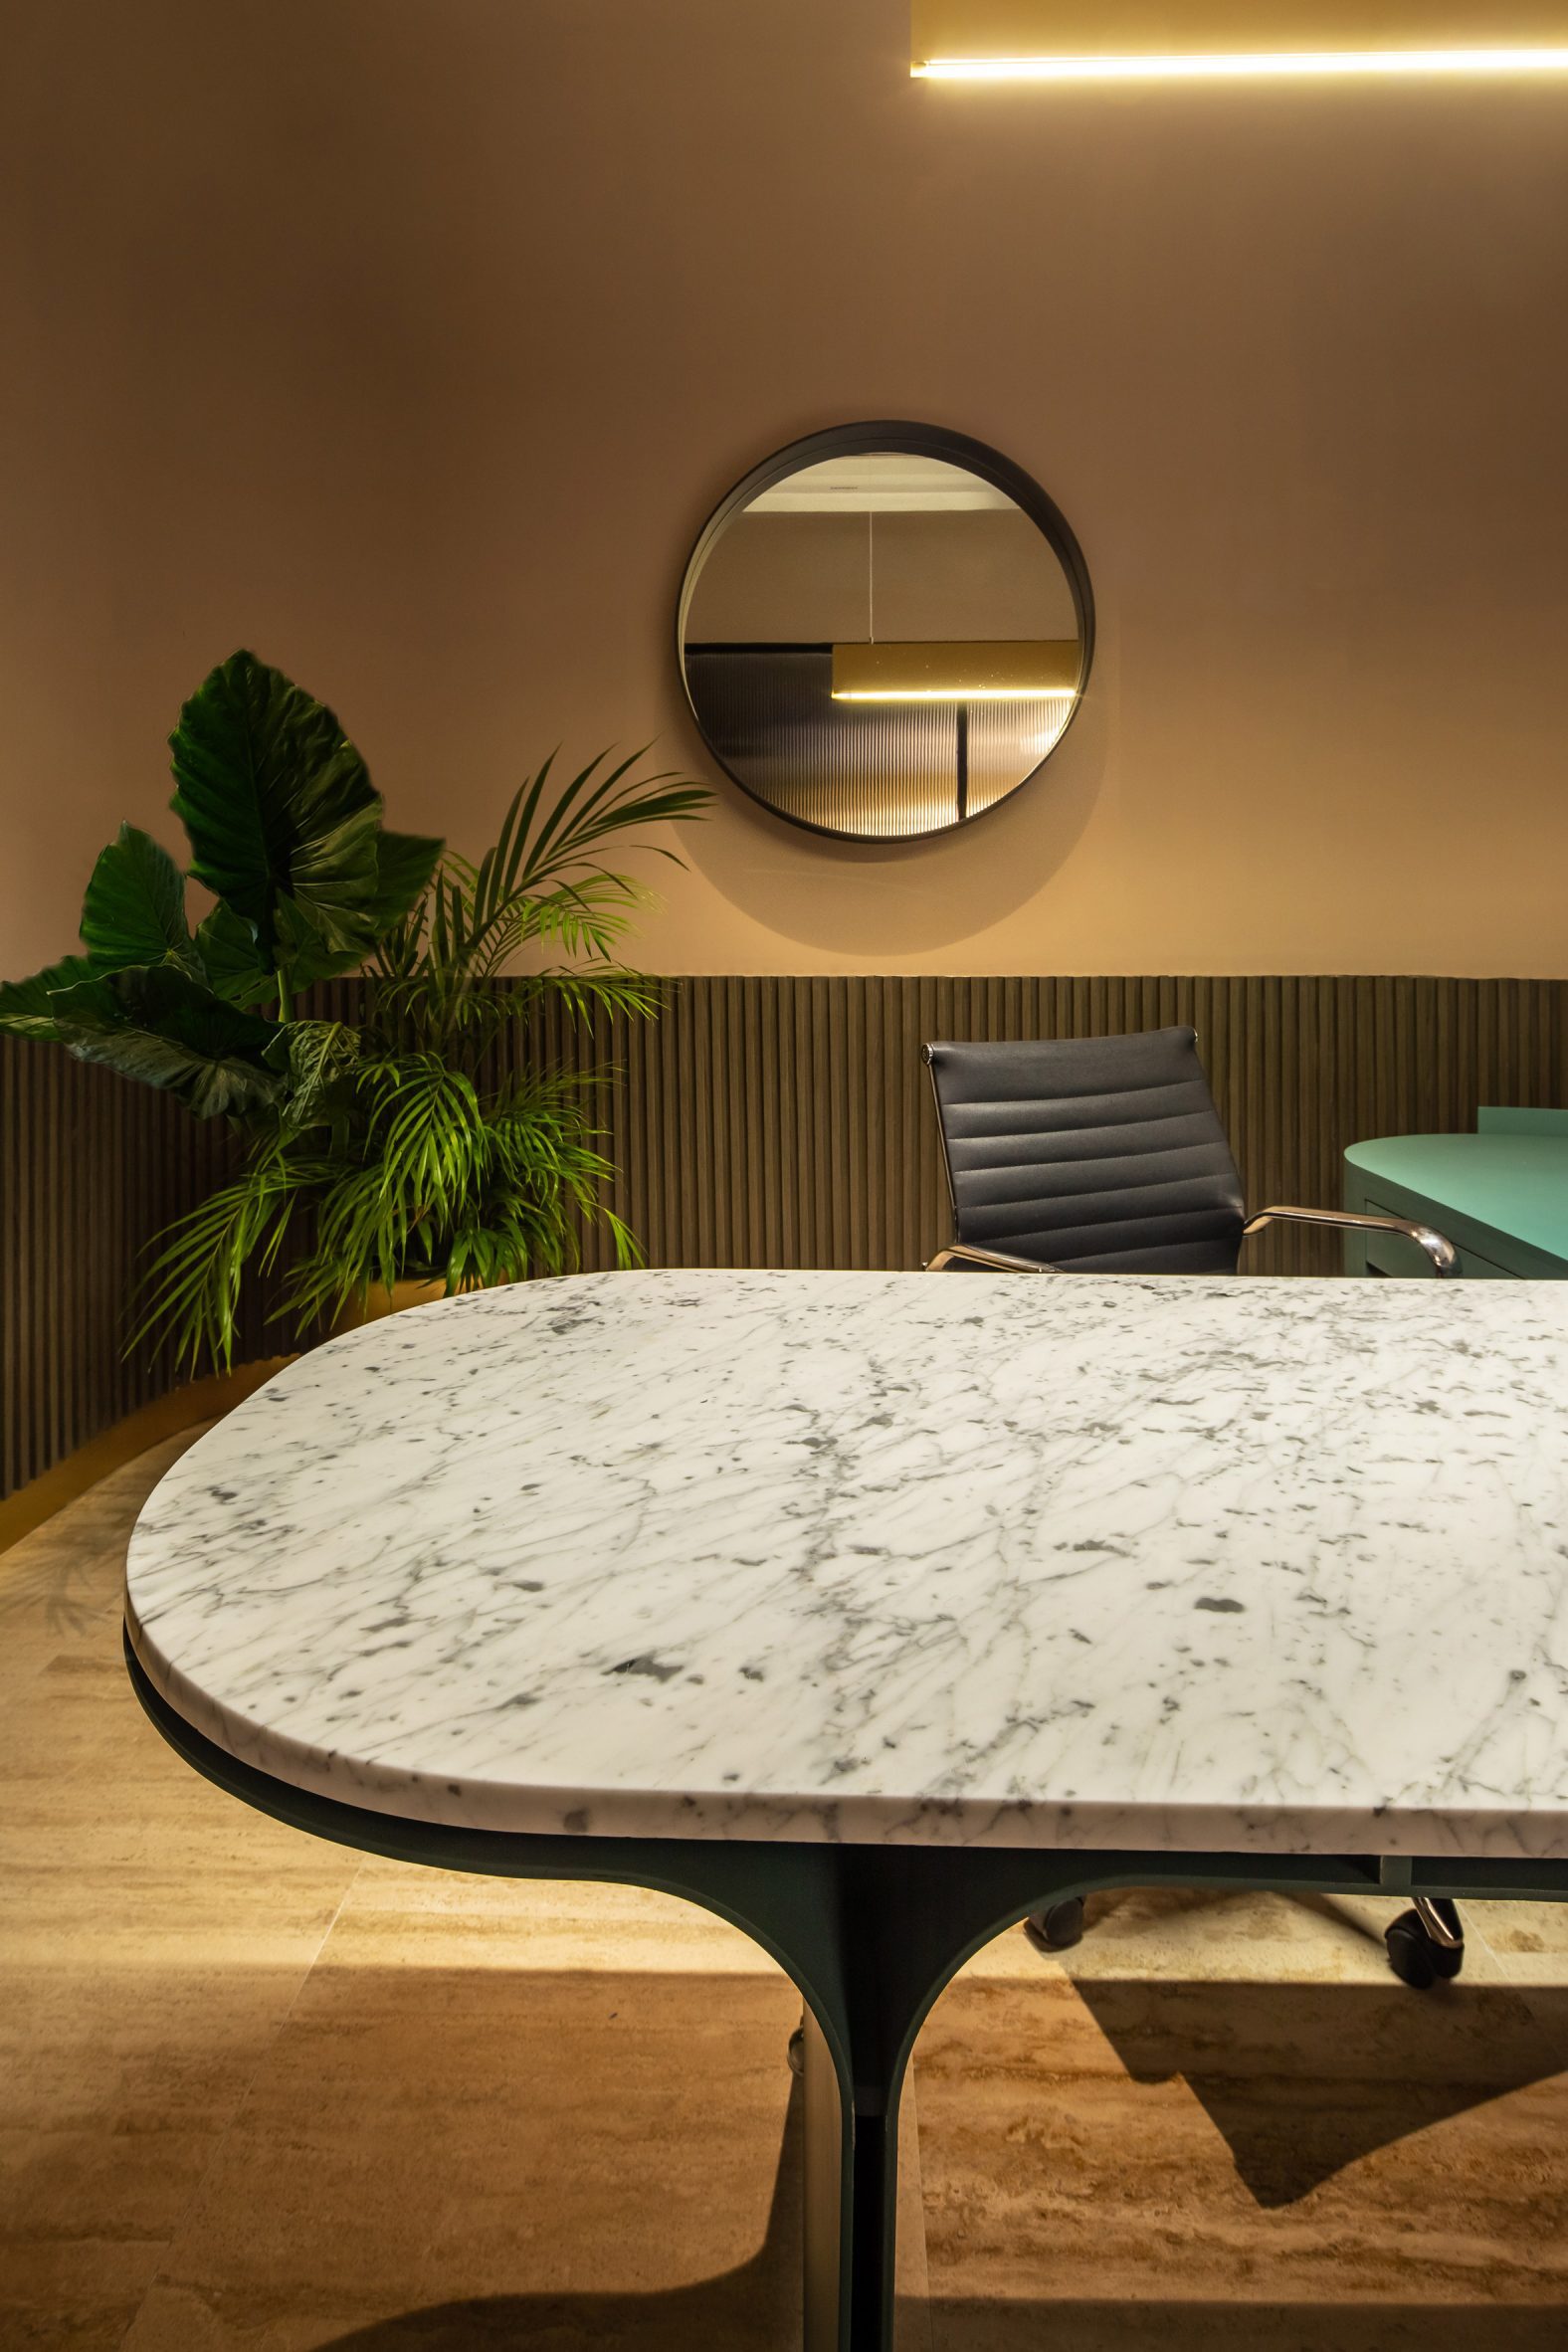 Álvaro Hernández Félix Studio added marble accents to the design